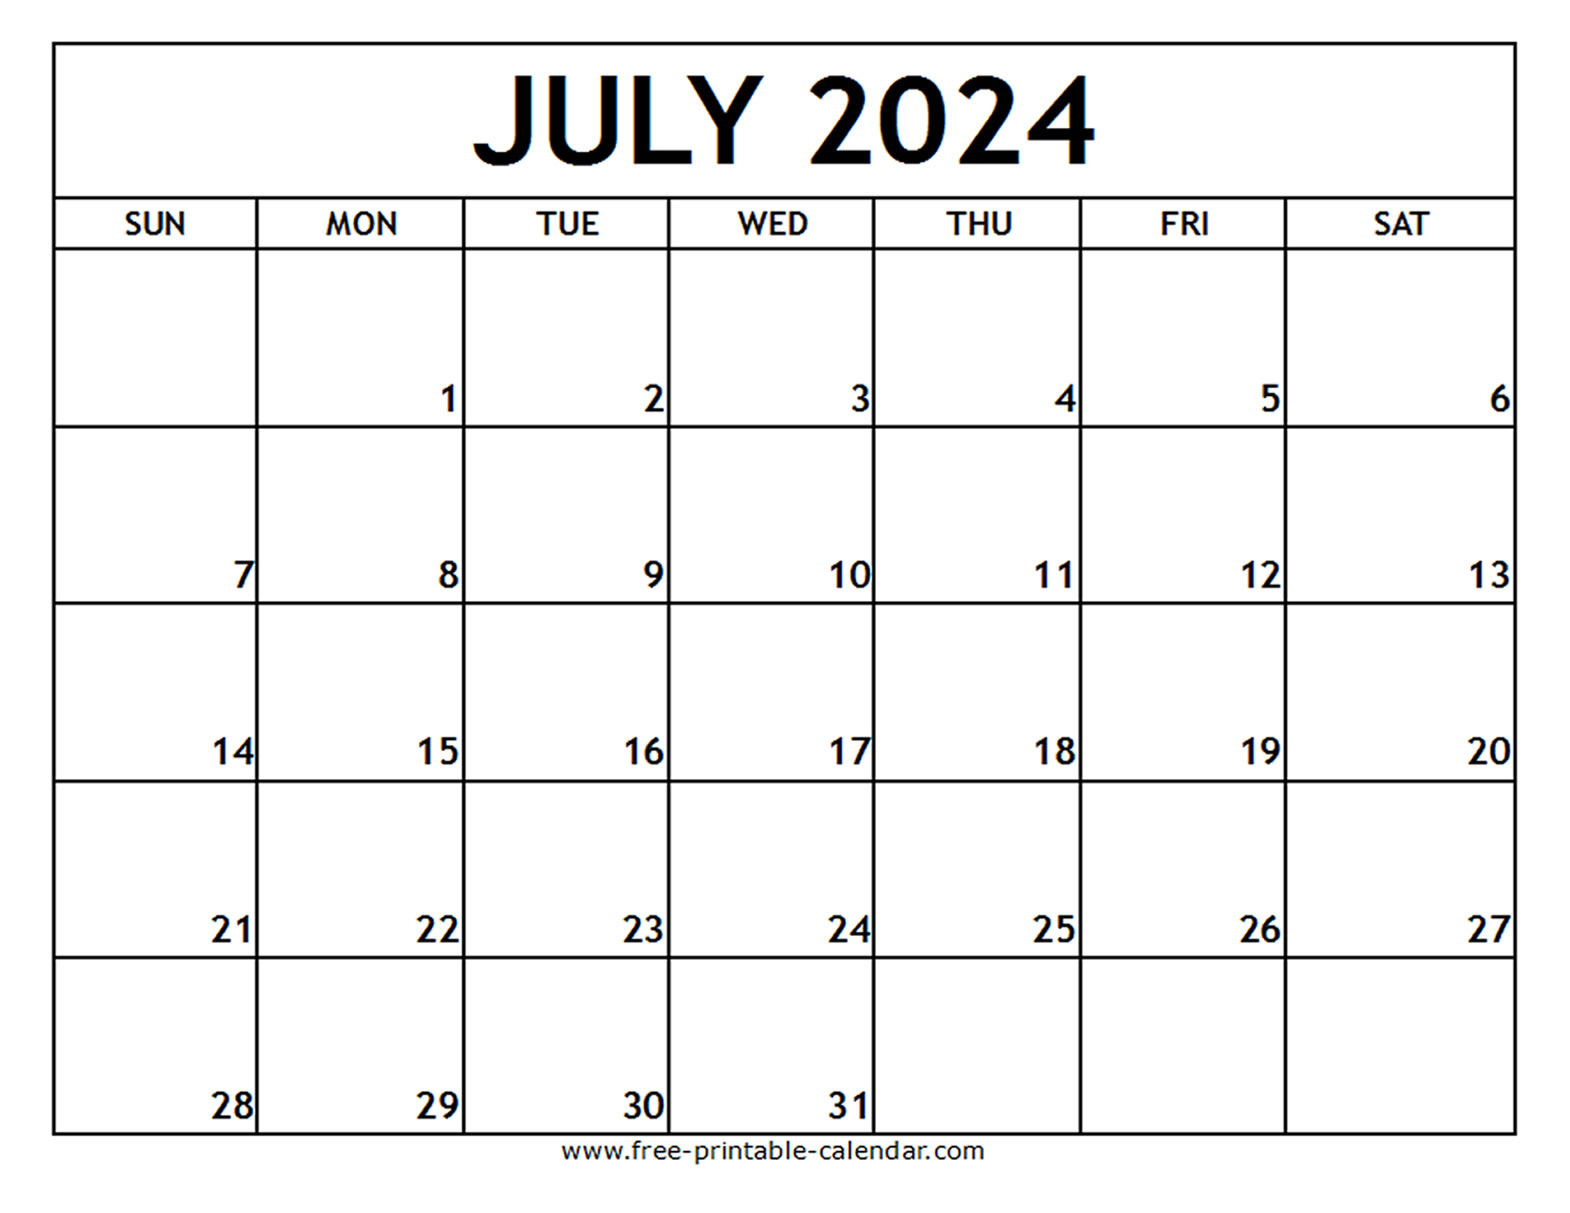 July 2024 Printable Calendar - Free-Printable-Calendar | Calendar Template For July 2024